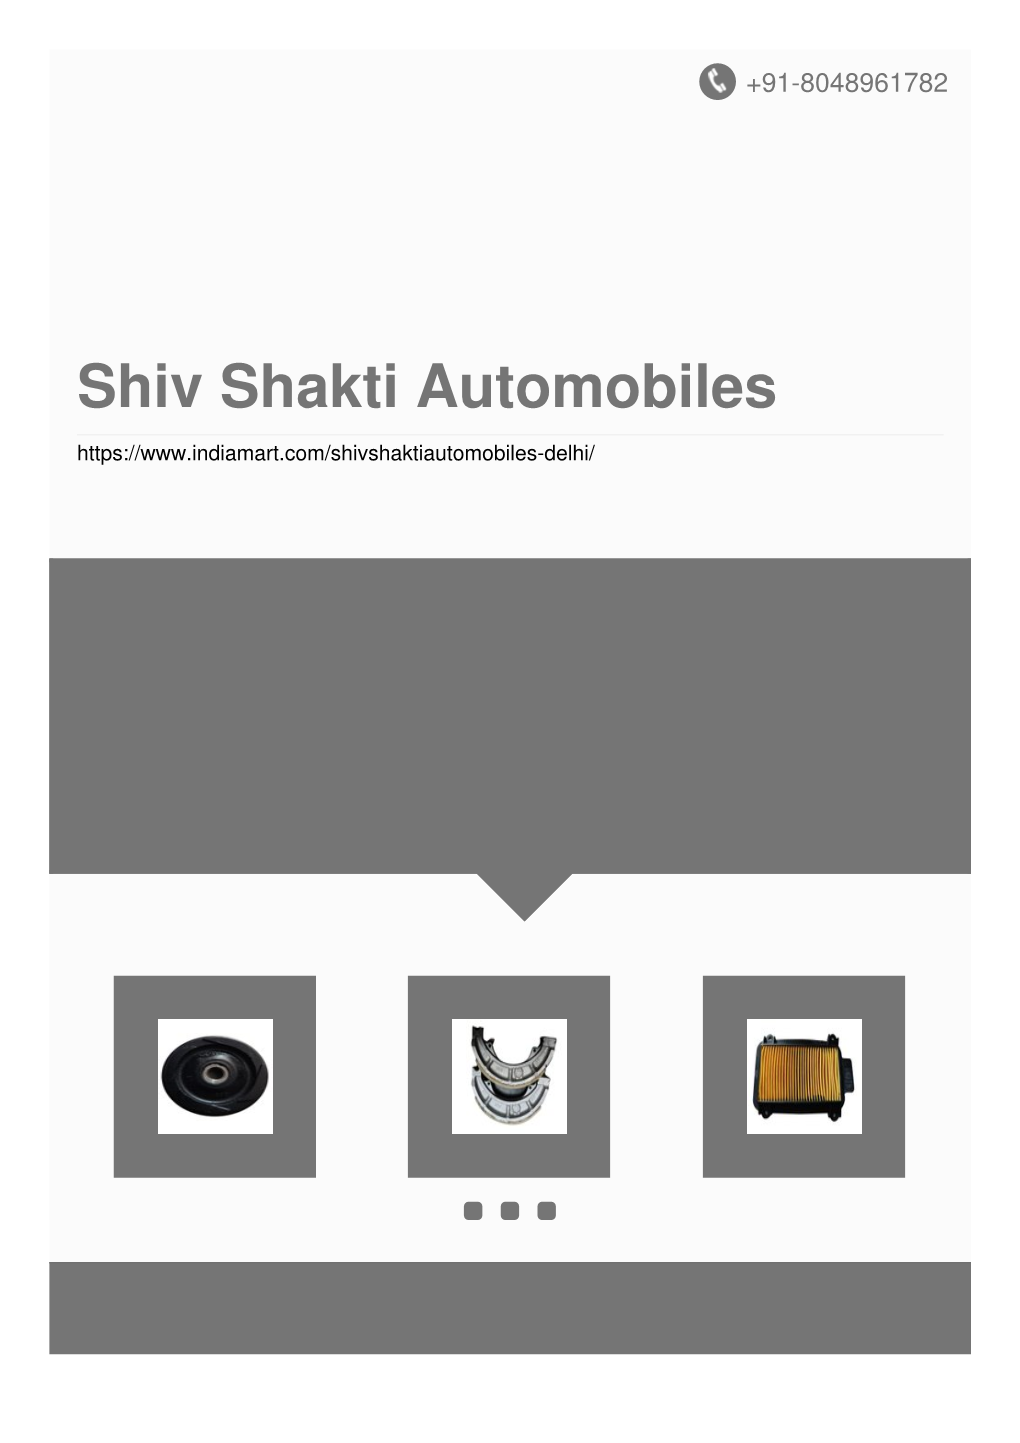 Shiv Shakti Automobiles About Us